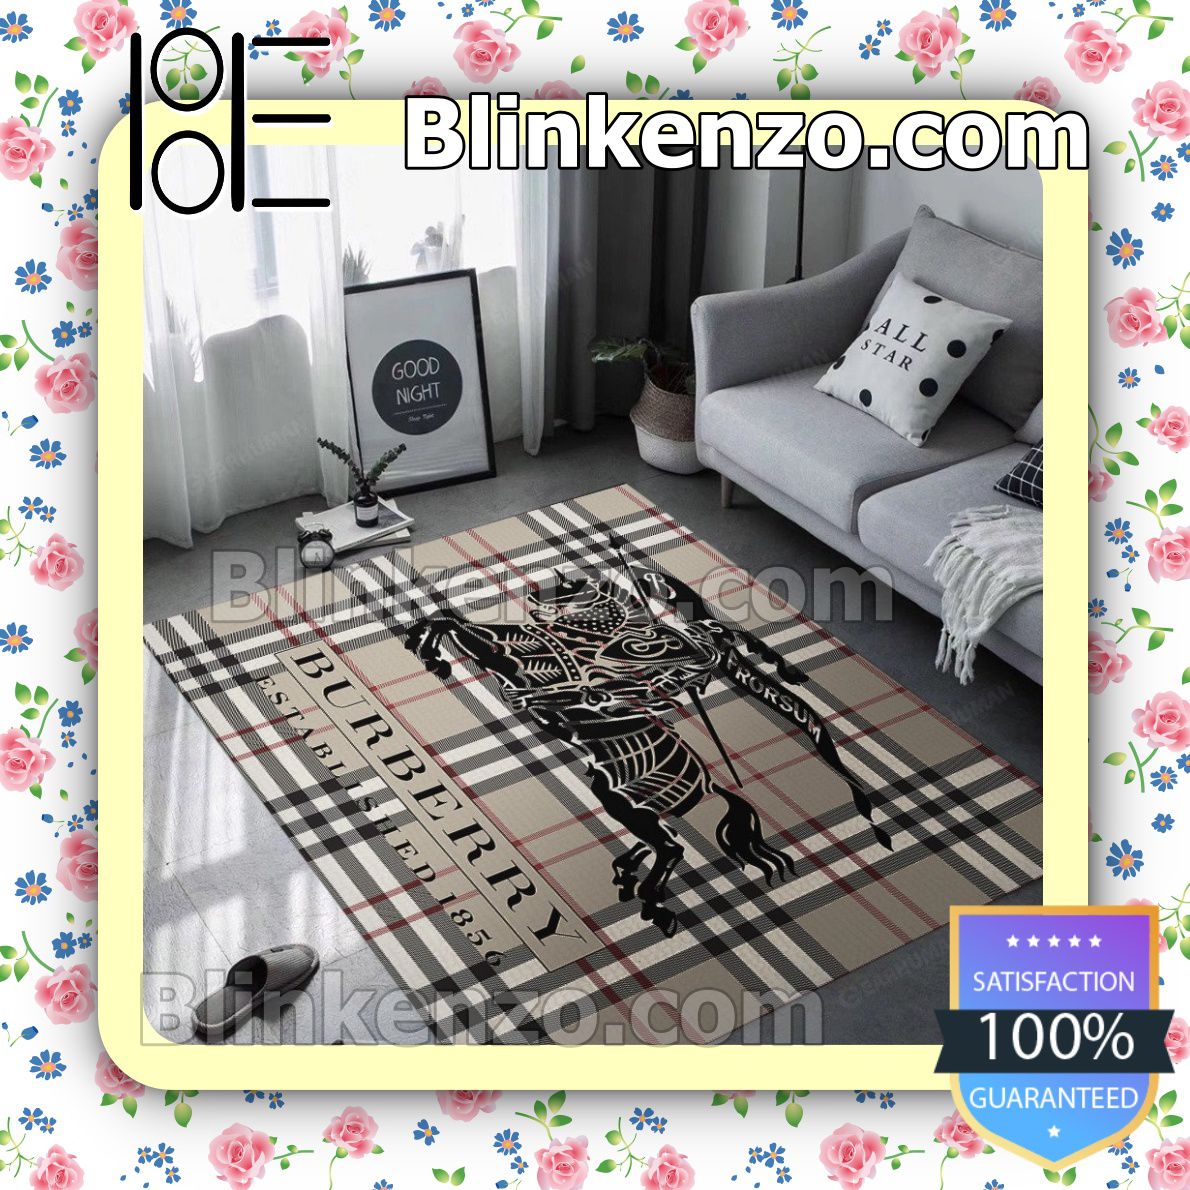 Burberry Established 1856 Plaid Luxury Carpet Runners